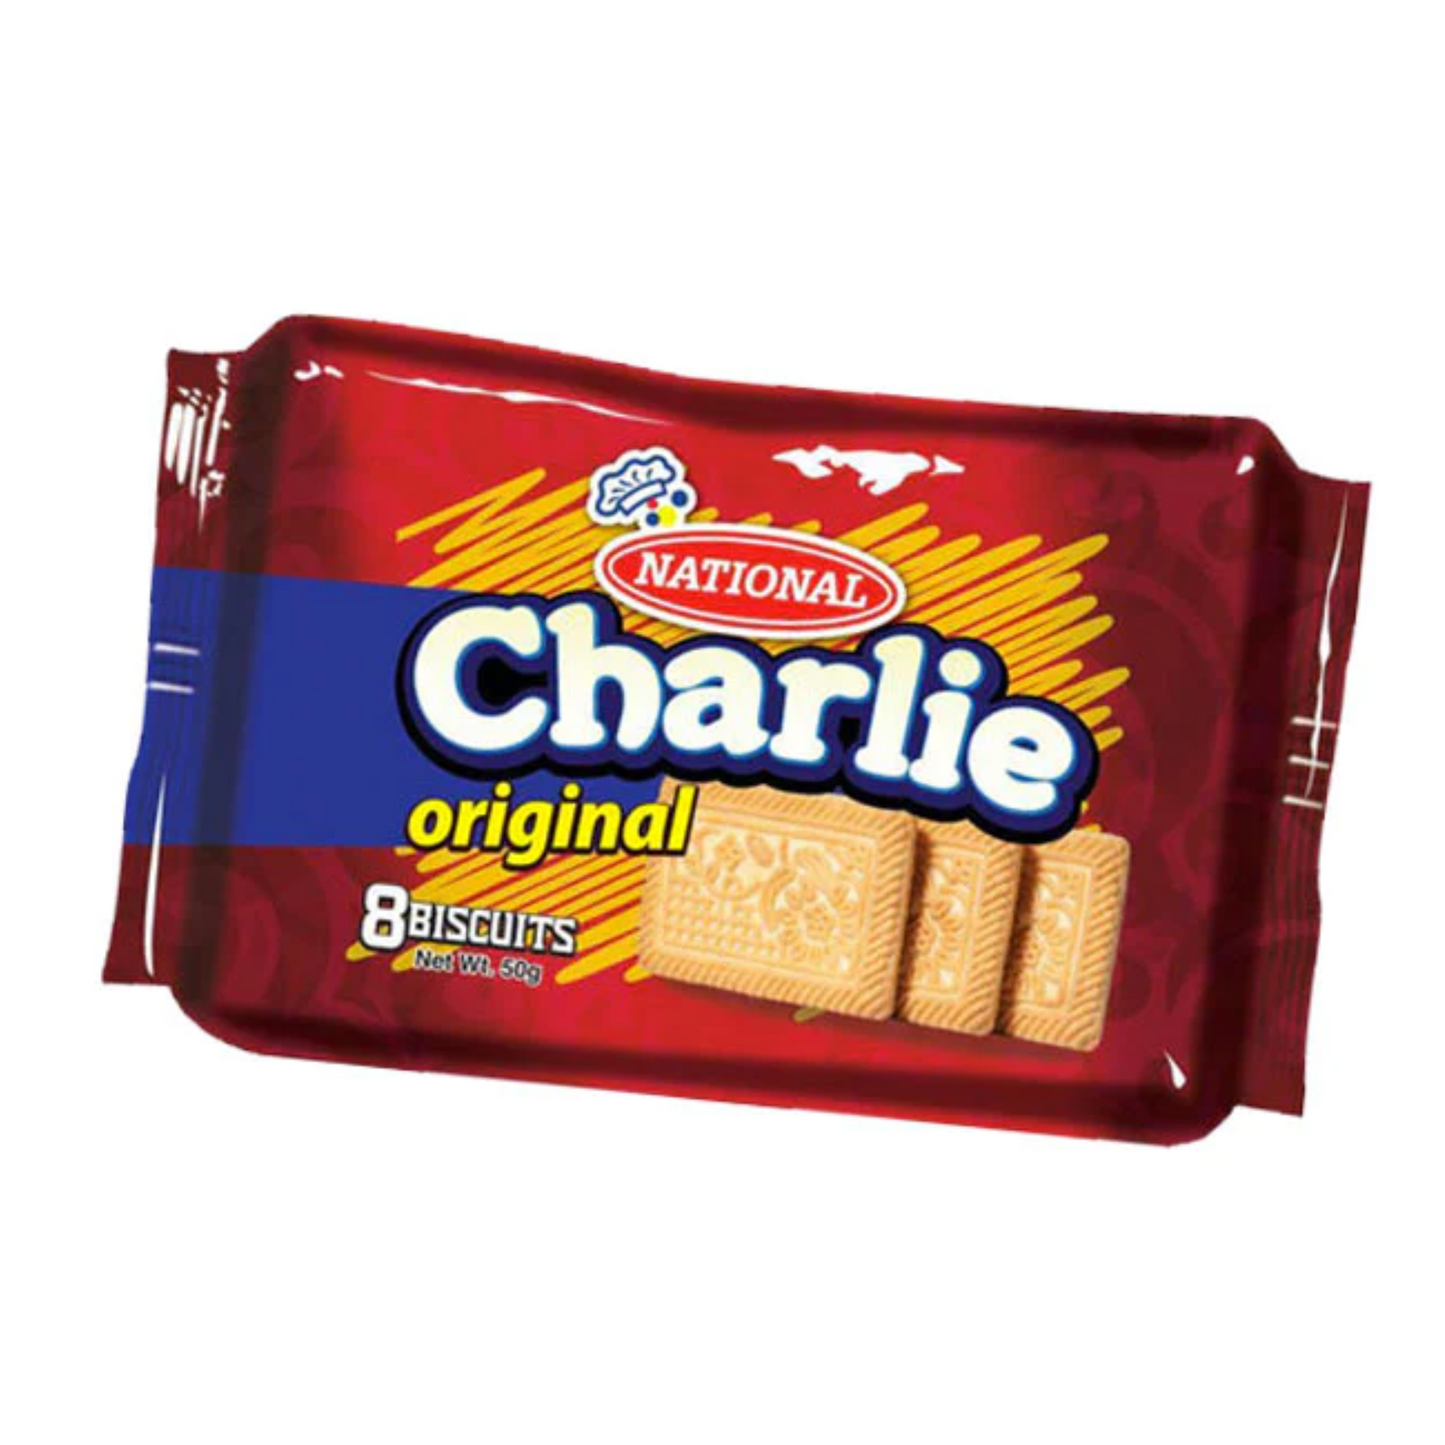 National Charlie Original Biscuits 50g